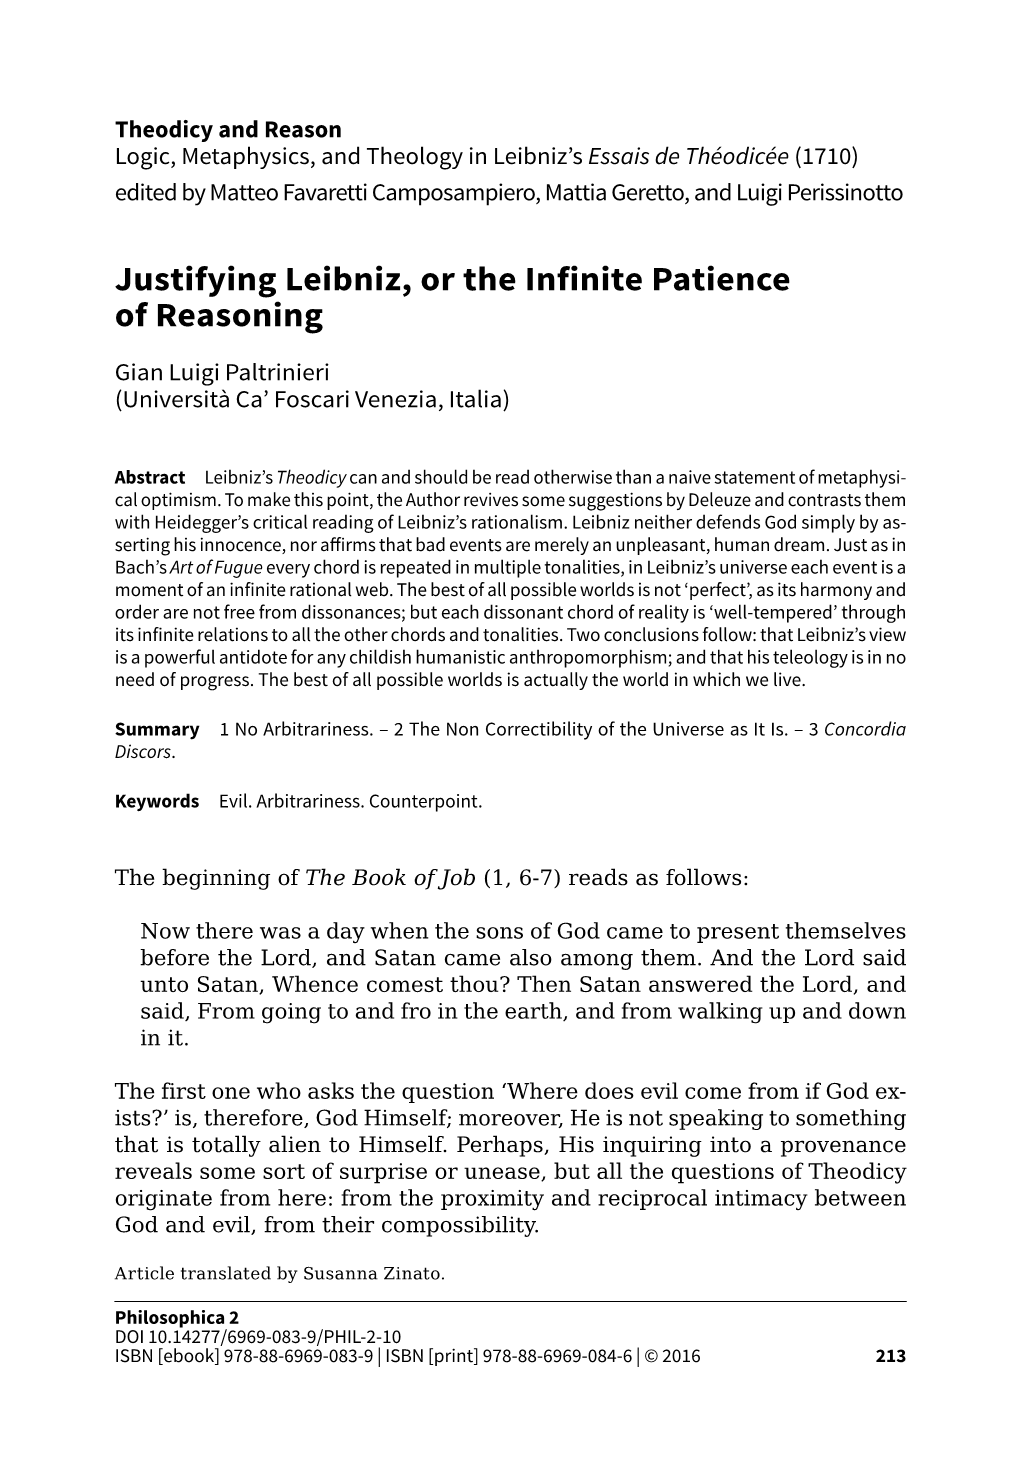 Justifying Leibniz, Or the Infinite Patience of Reasoning